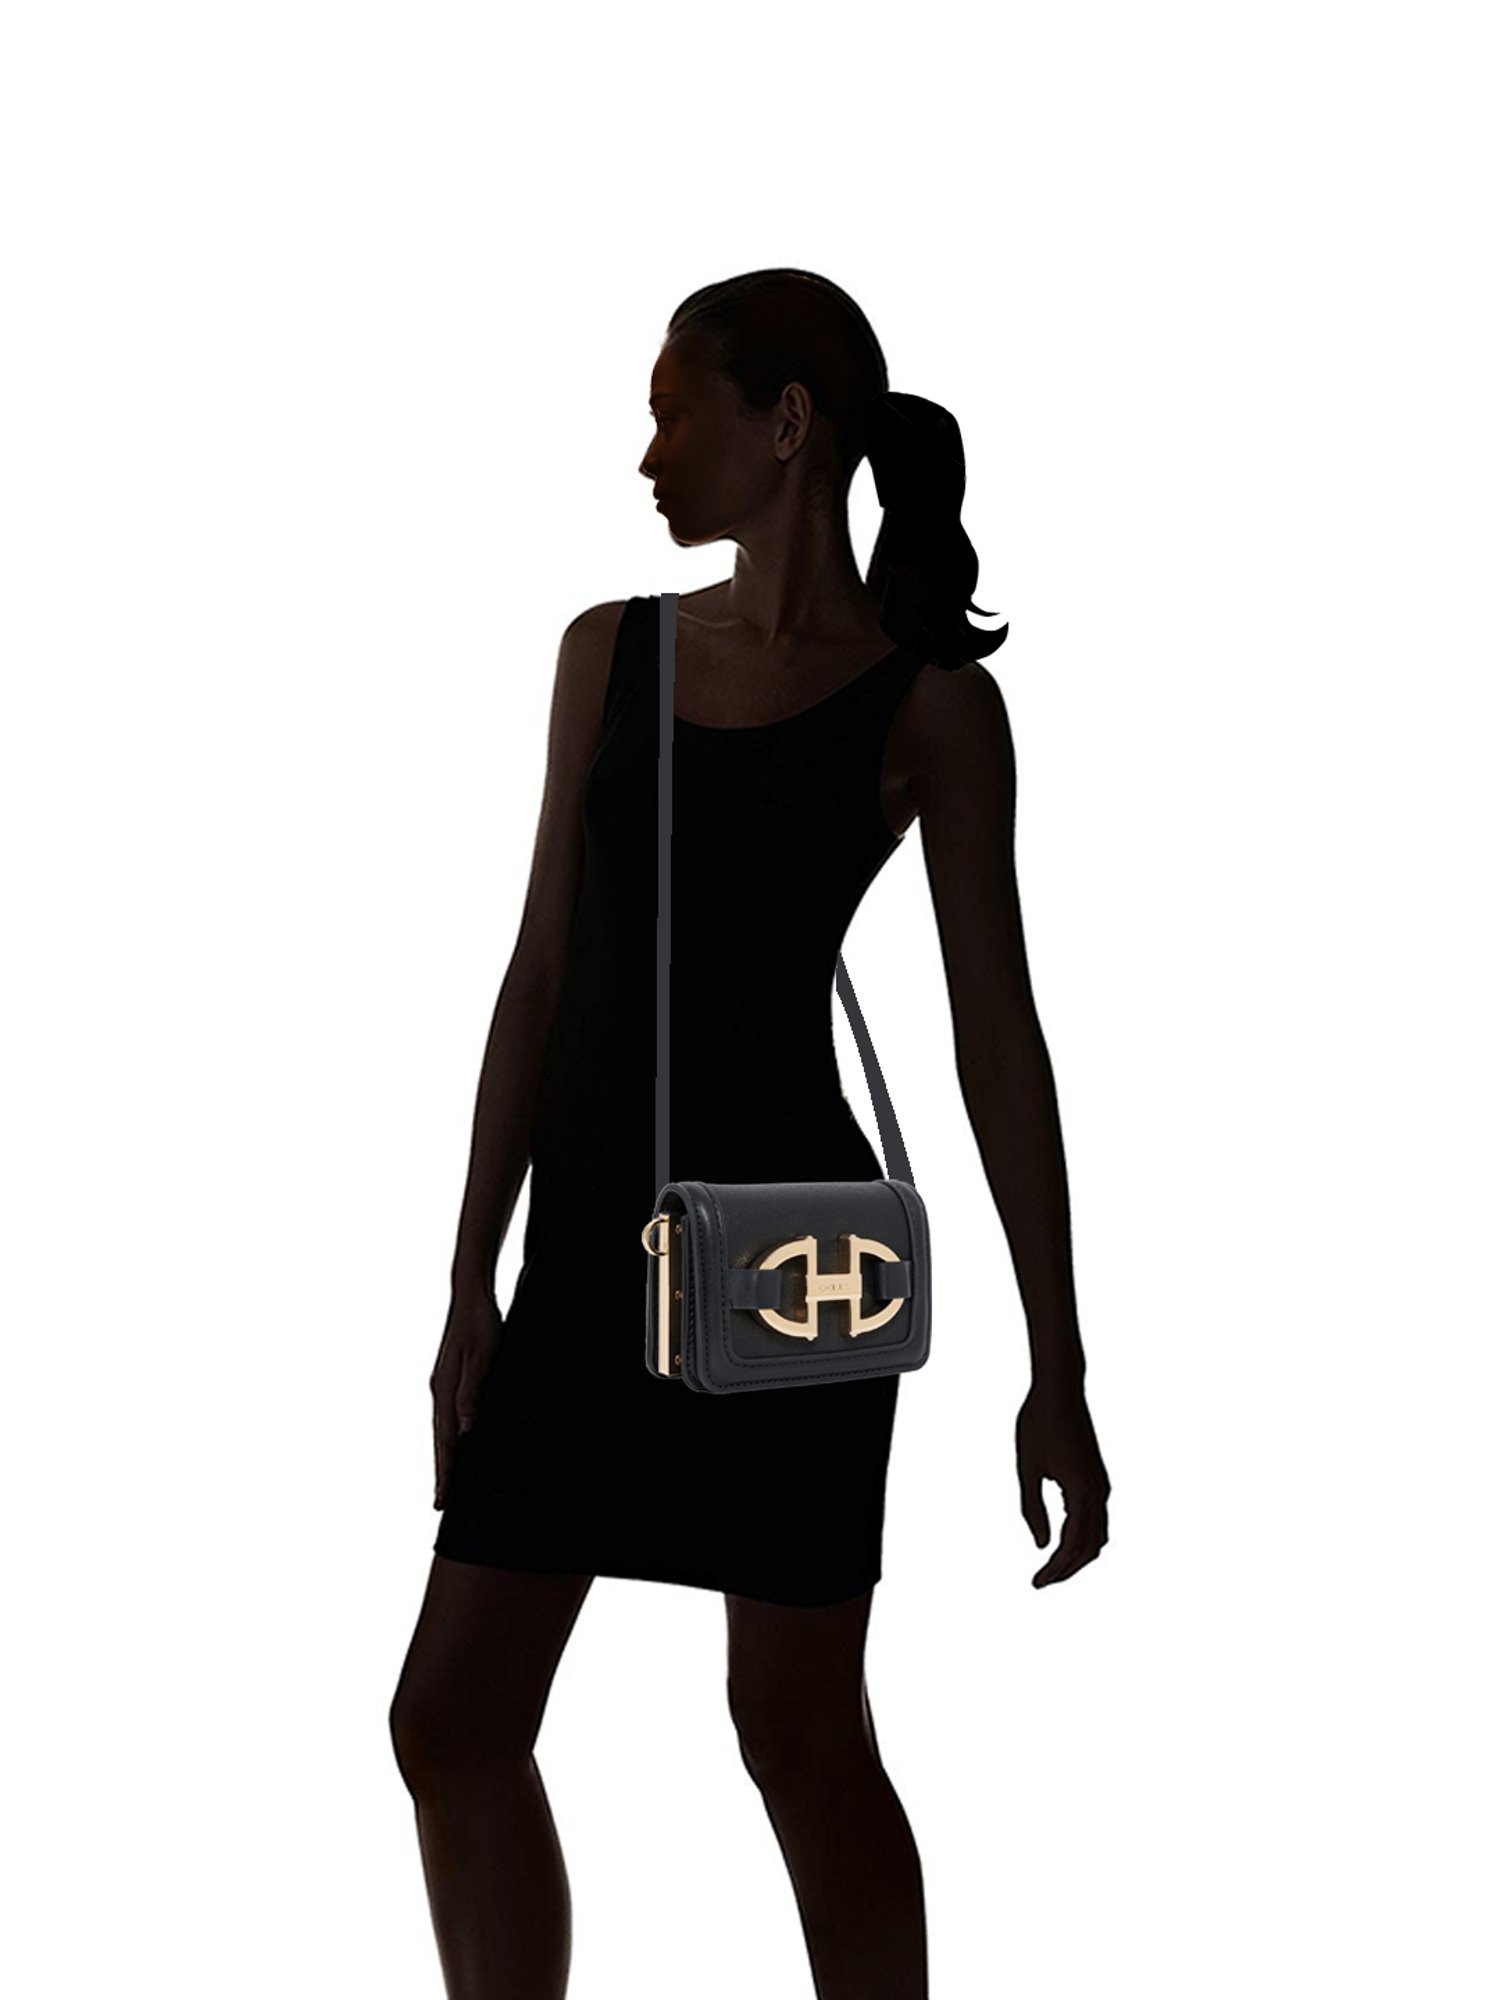 Buy Aldo Maverton008 Black Solid Medium Cross Body Bag Online At Best Price  @ Tata CLiQ